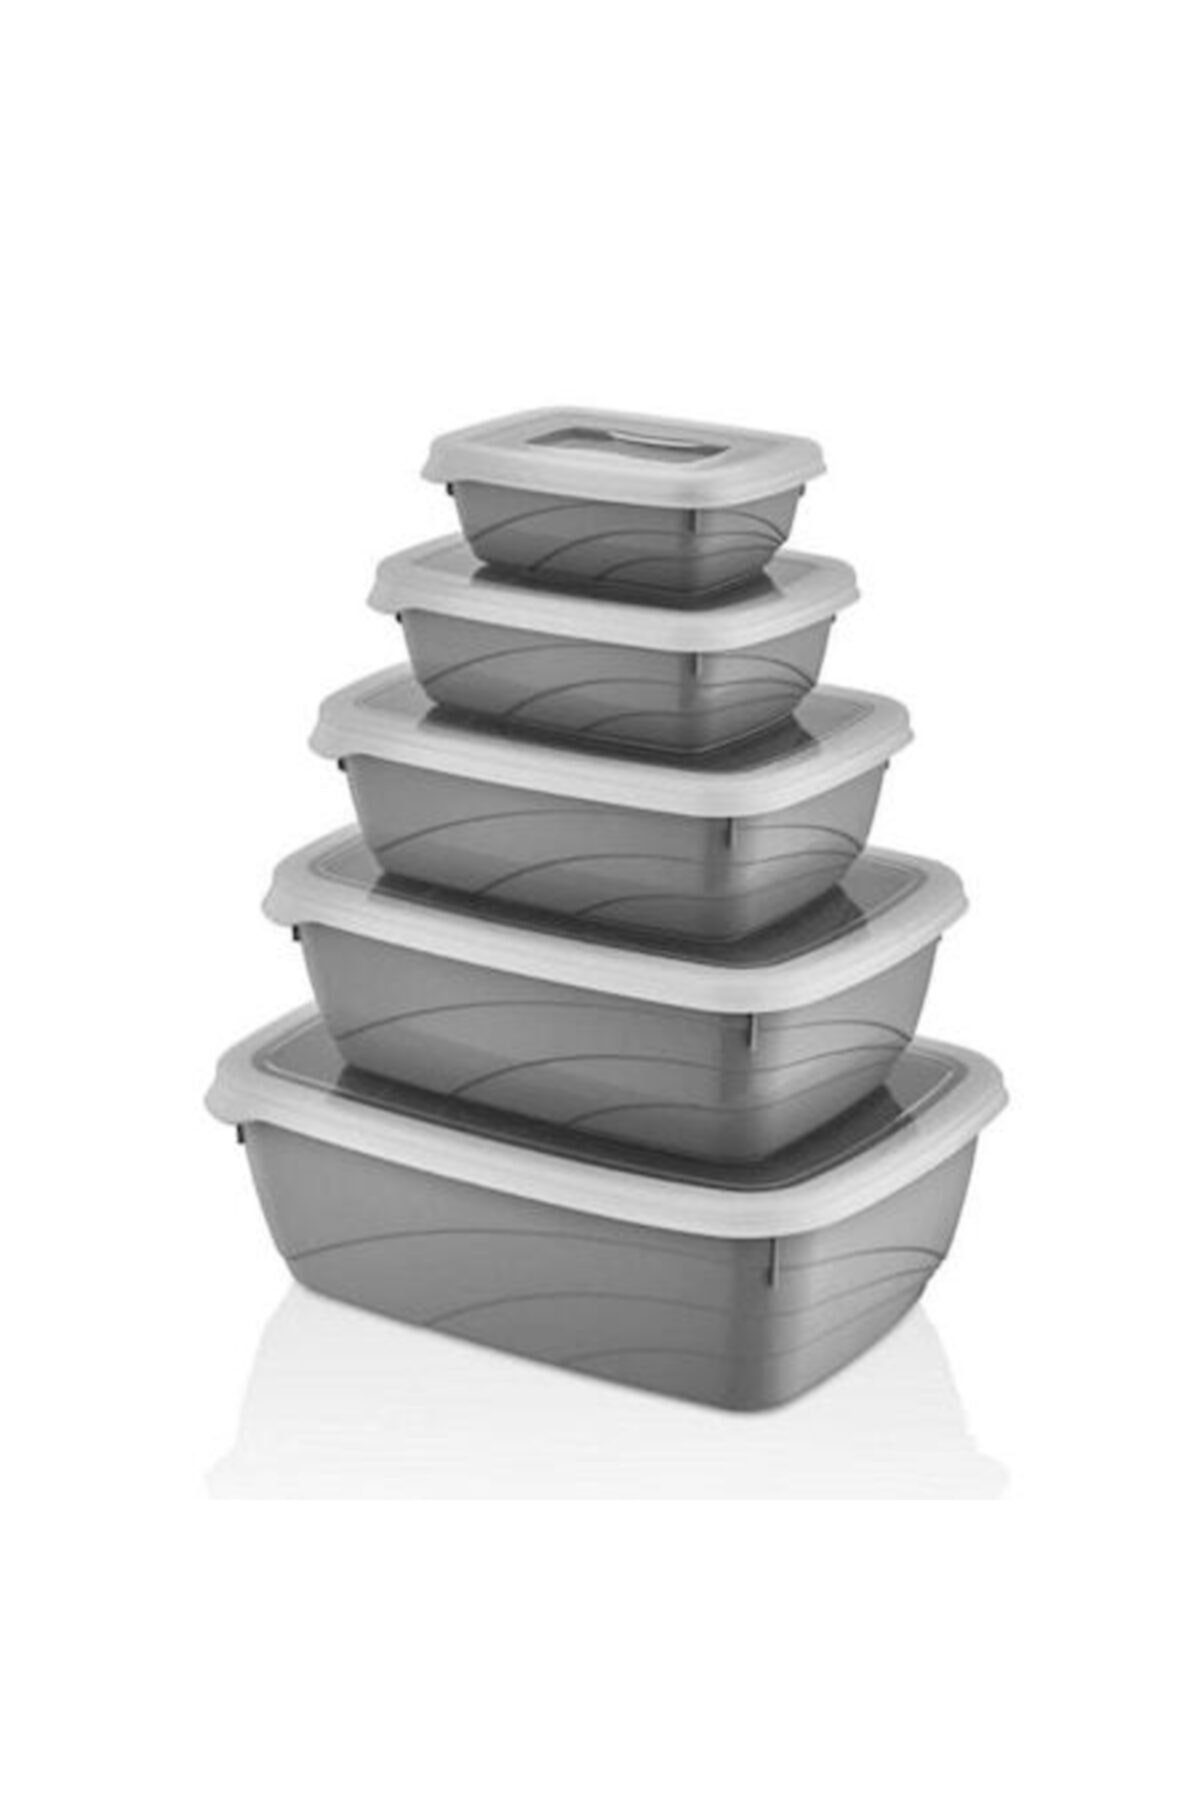 Vip Ahmet Vorratsdose 5-Teilig Vakuum-Lagerbehälter Vorratsdosen Lebensmittelaufbewahrung Boxen grau